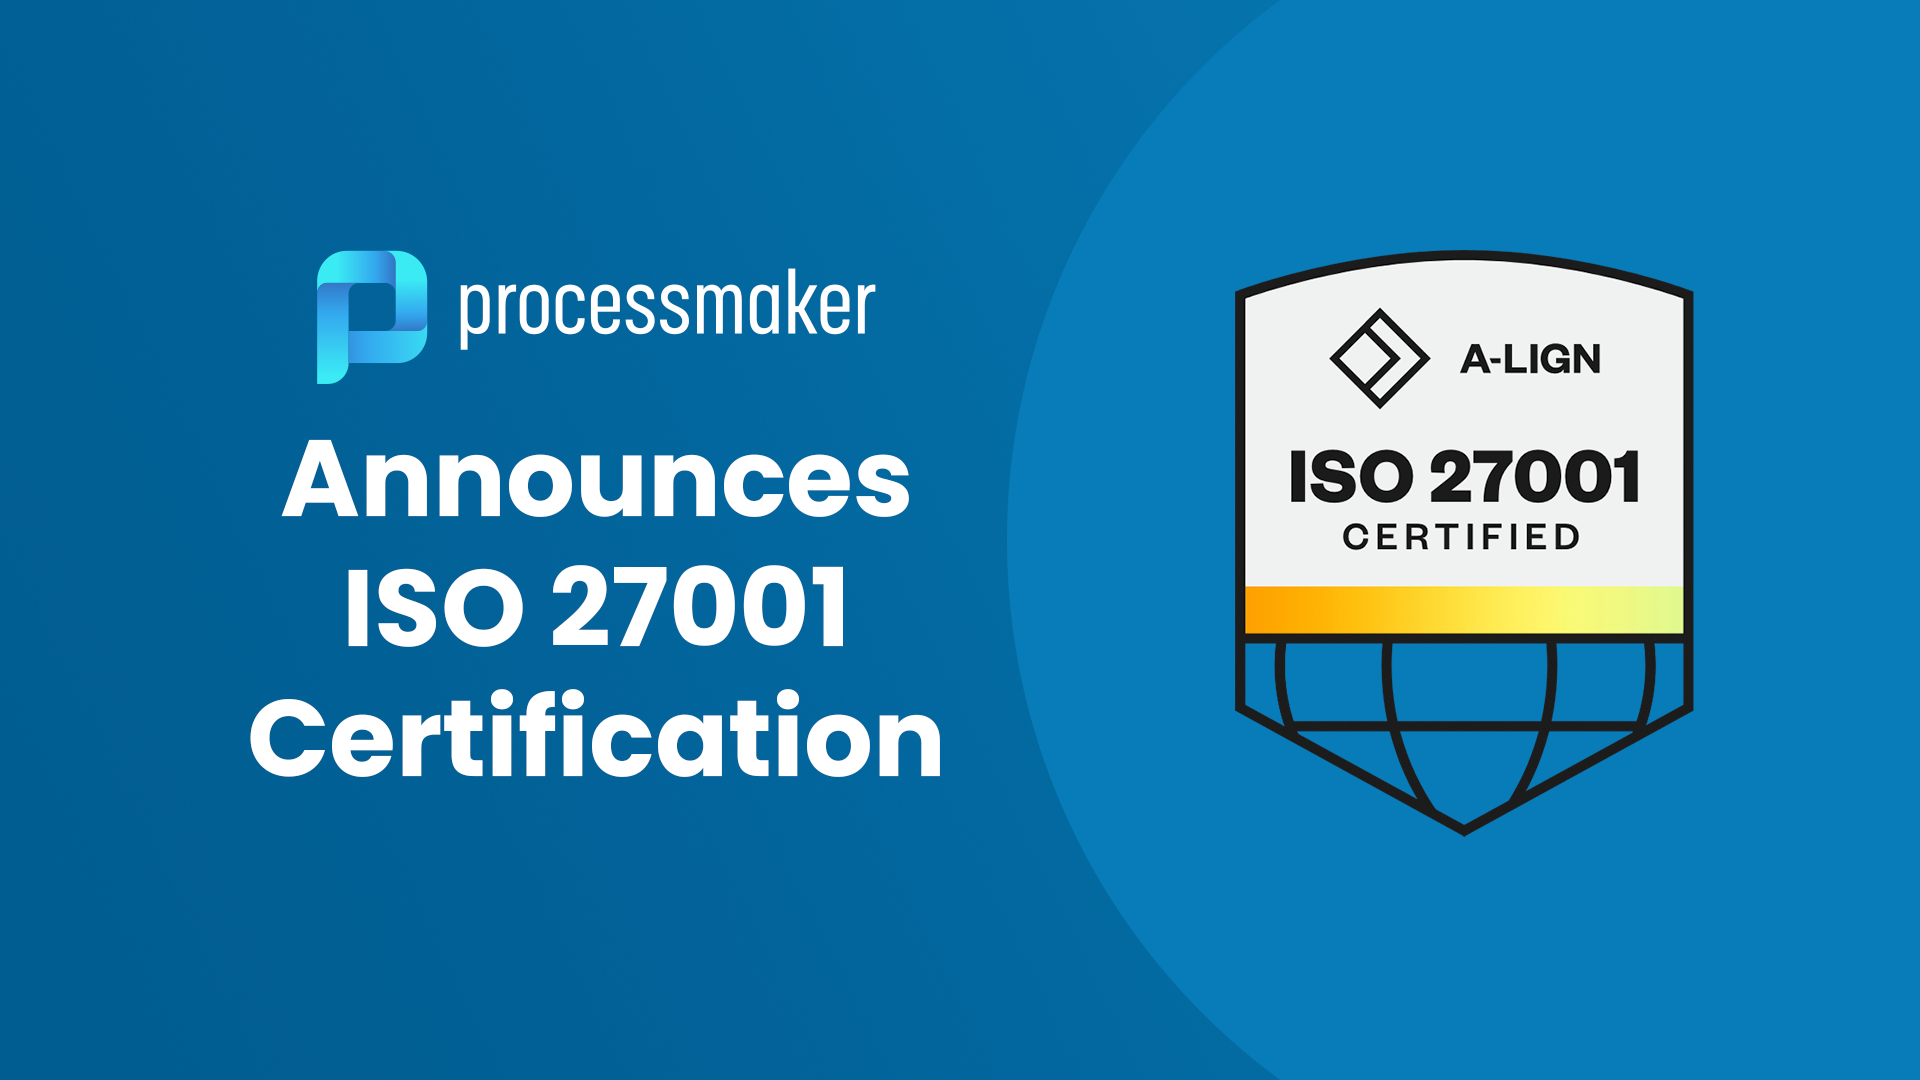 ProcessMaker annonce la certification ISO 27001